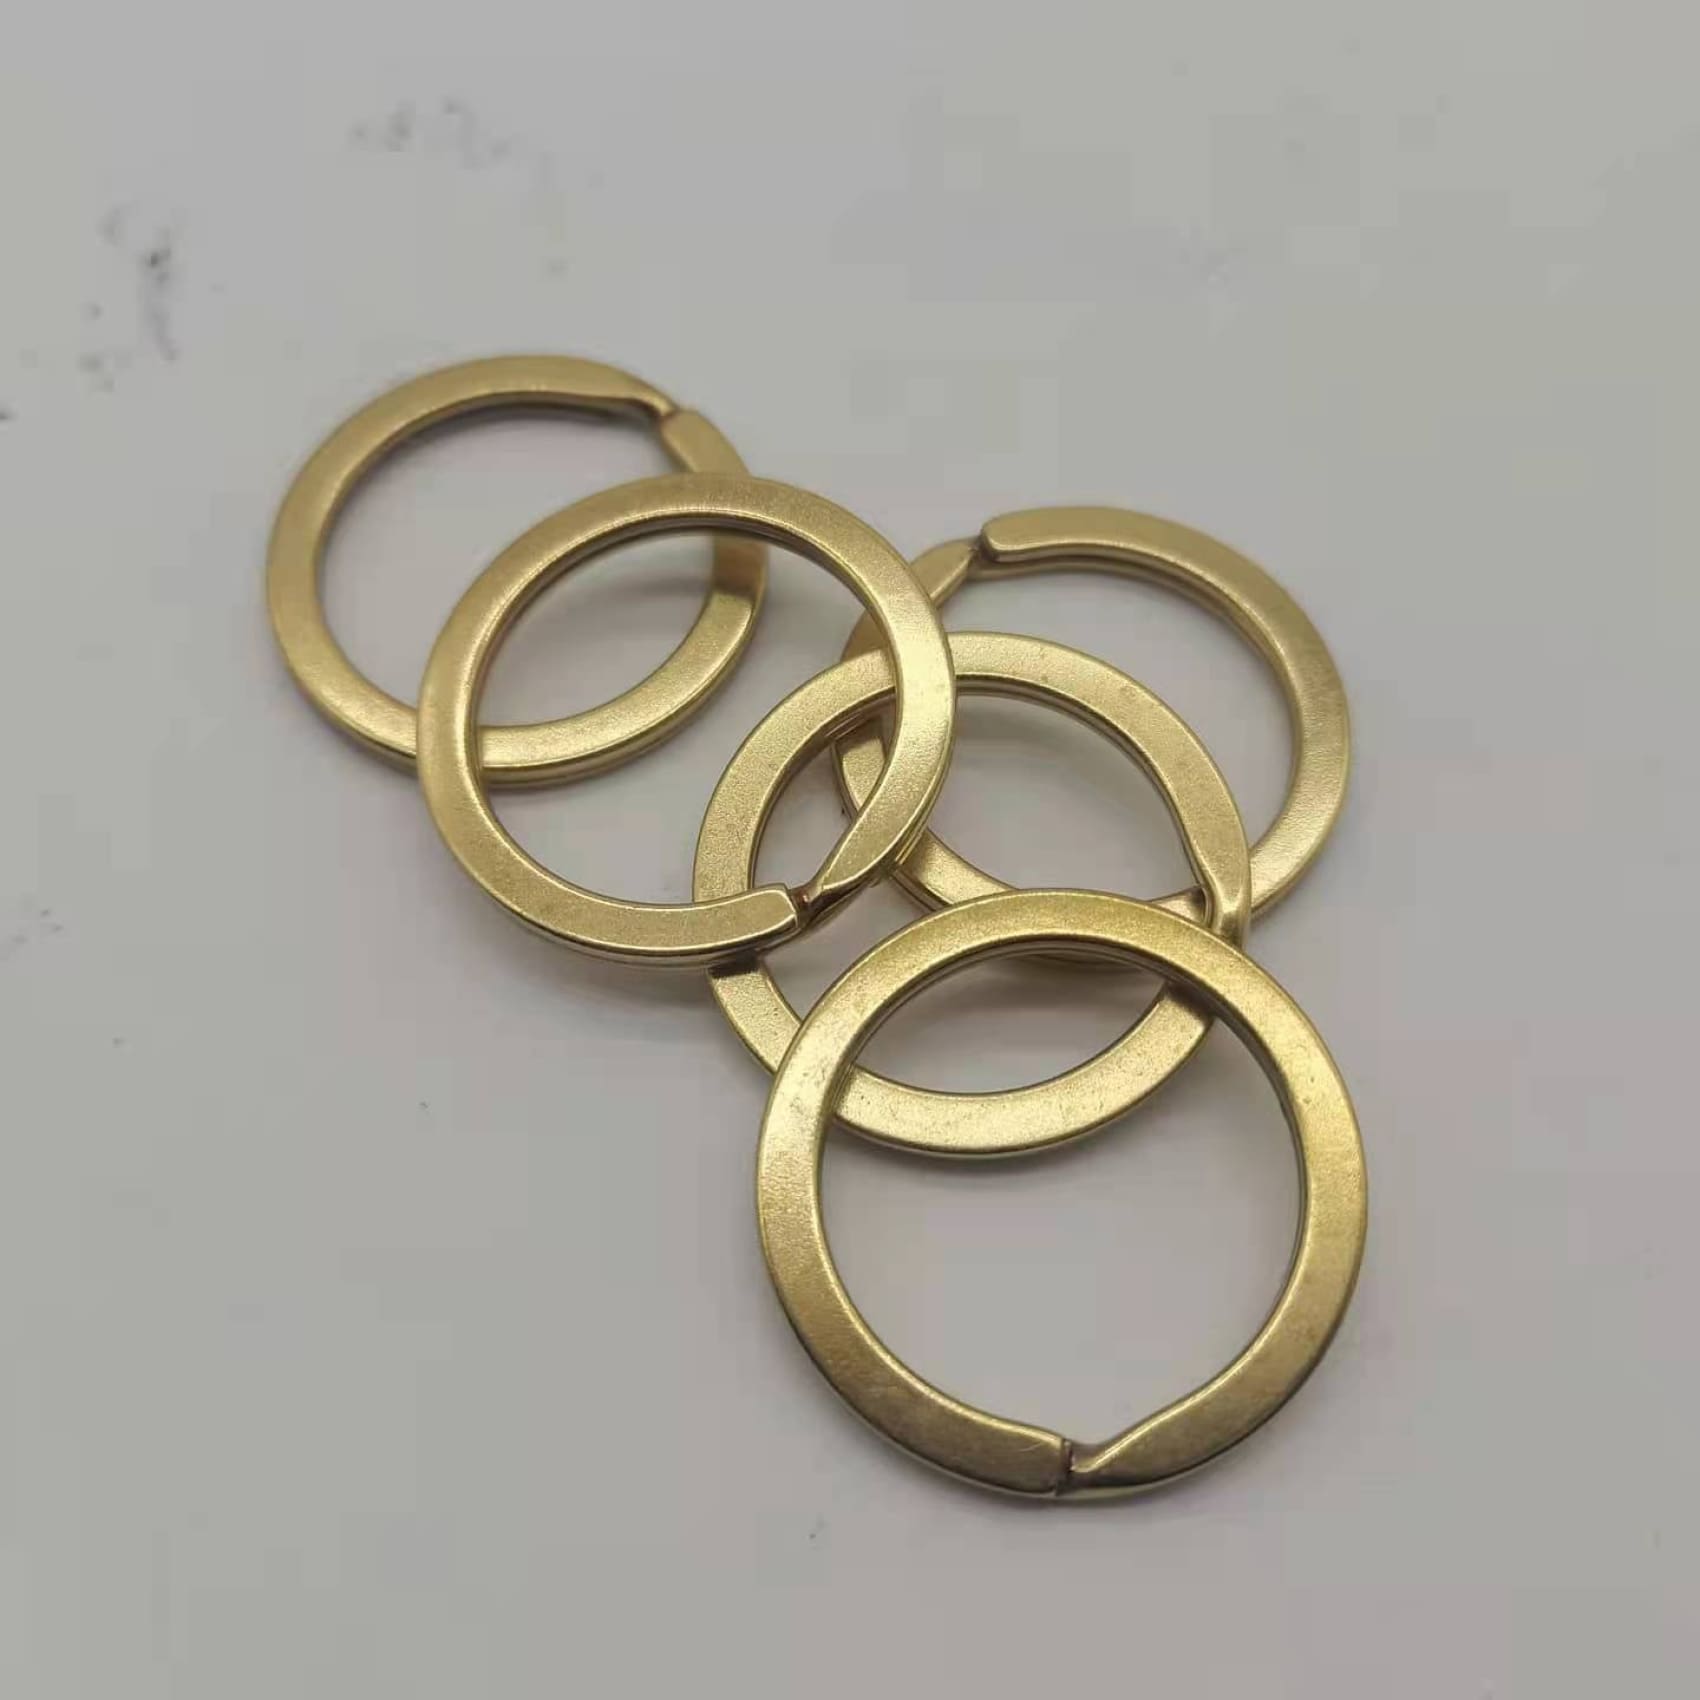 Preimium Solid Brass Split Key Ring Brass Connectors Flat Keyrings - Rings / Split Key Rings